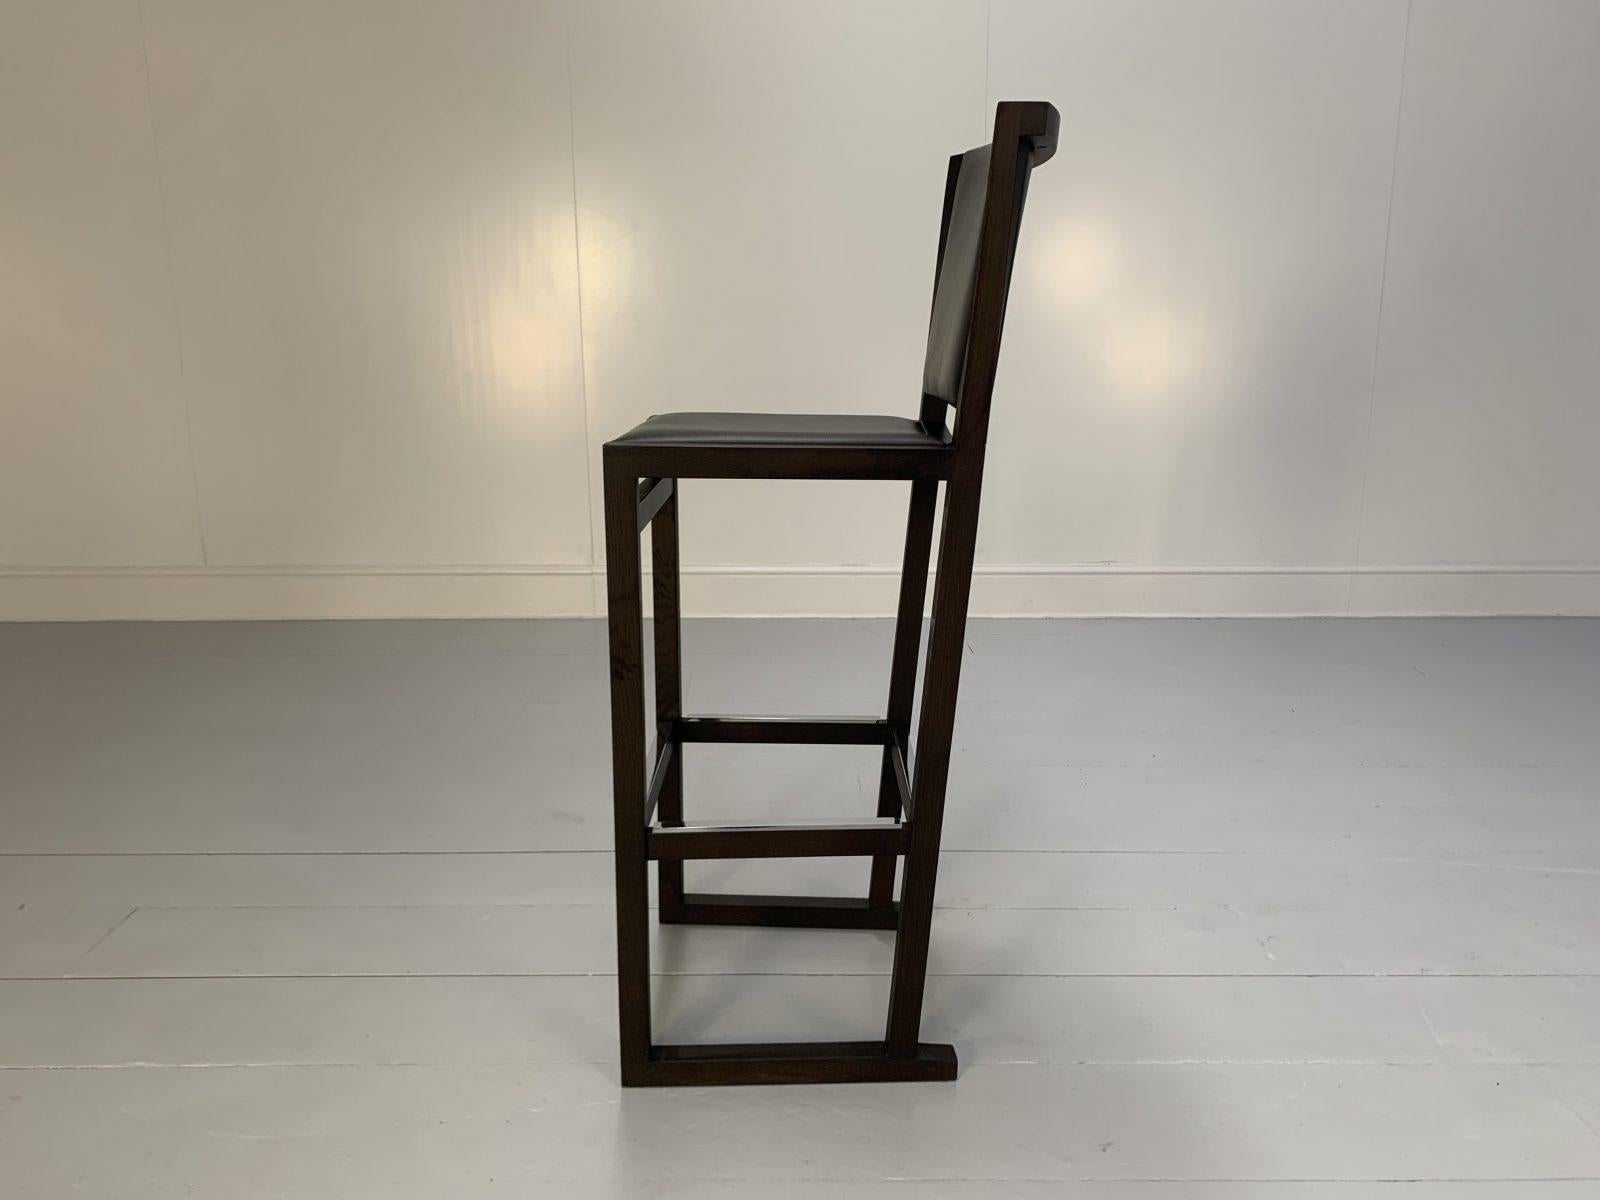 Pair of B&B Italia “Musa SM46G” Tall Bar Stool Chairs – In Dark Grey “Kasia” Lea For Sale 8